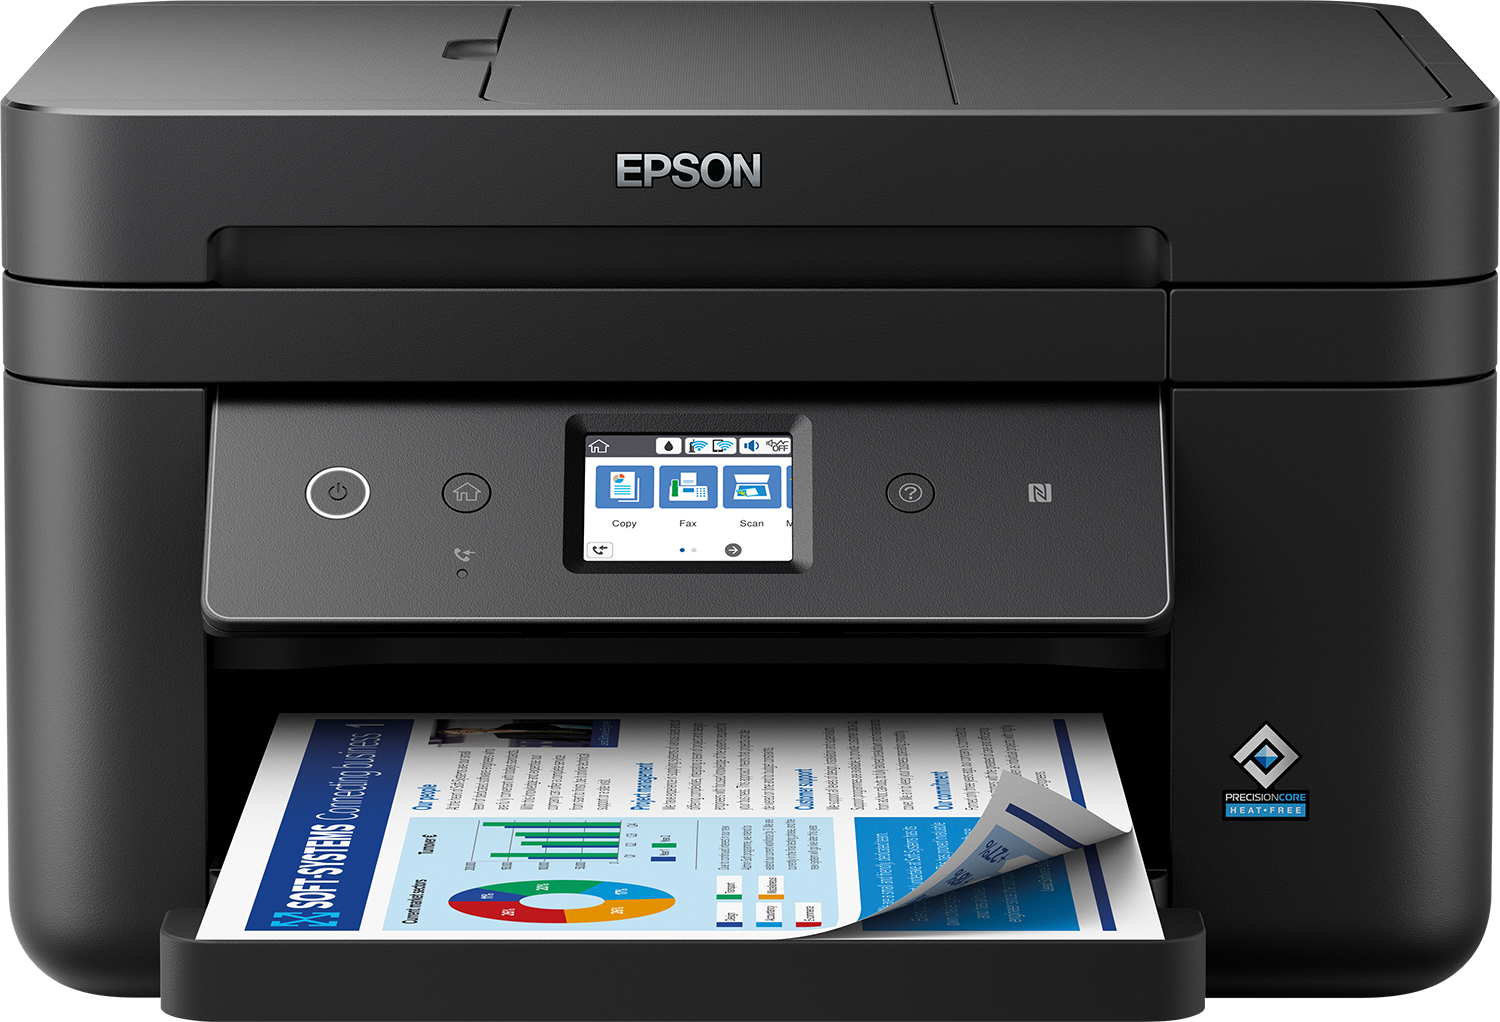 Epson WorkForce WF-2860DWF, Professional 4-in-1 Printer: Double